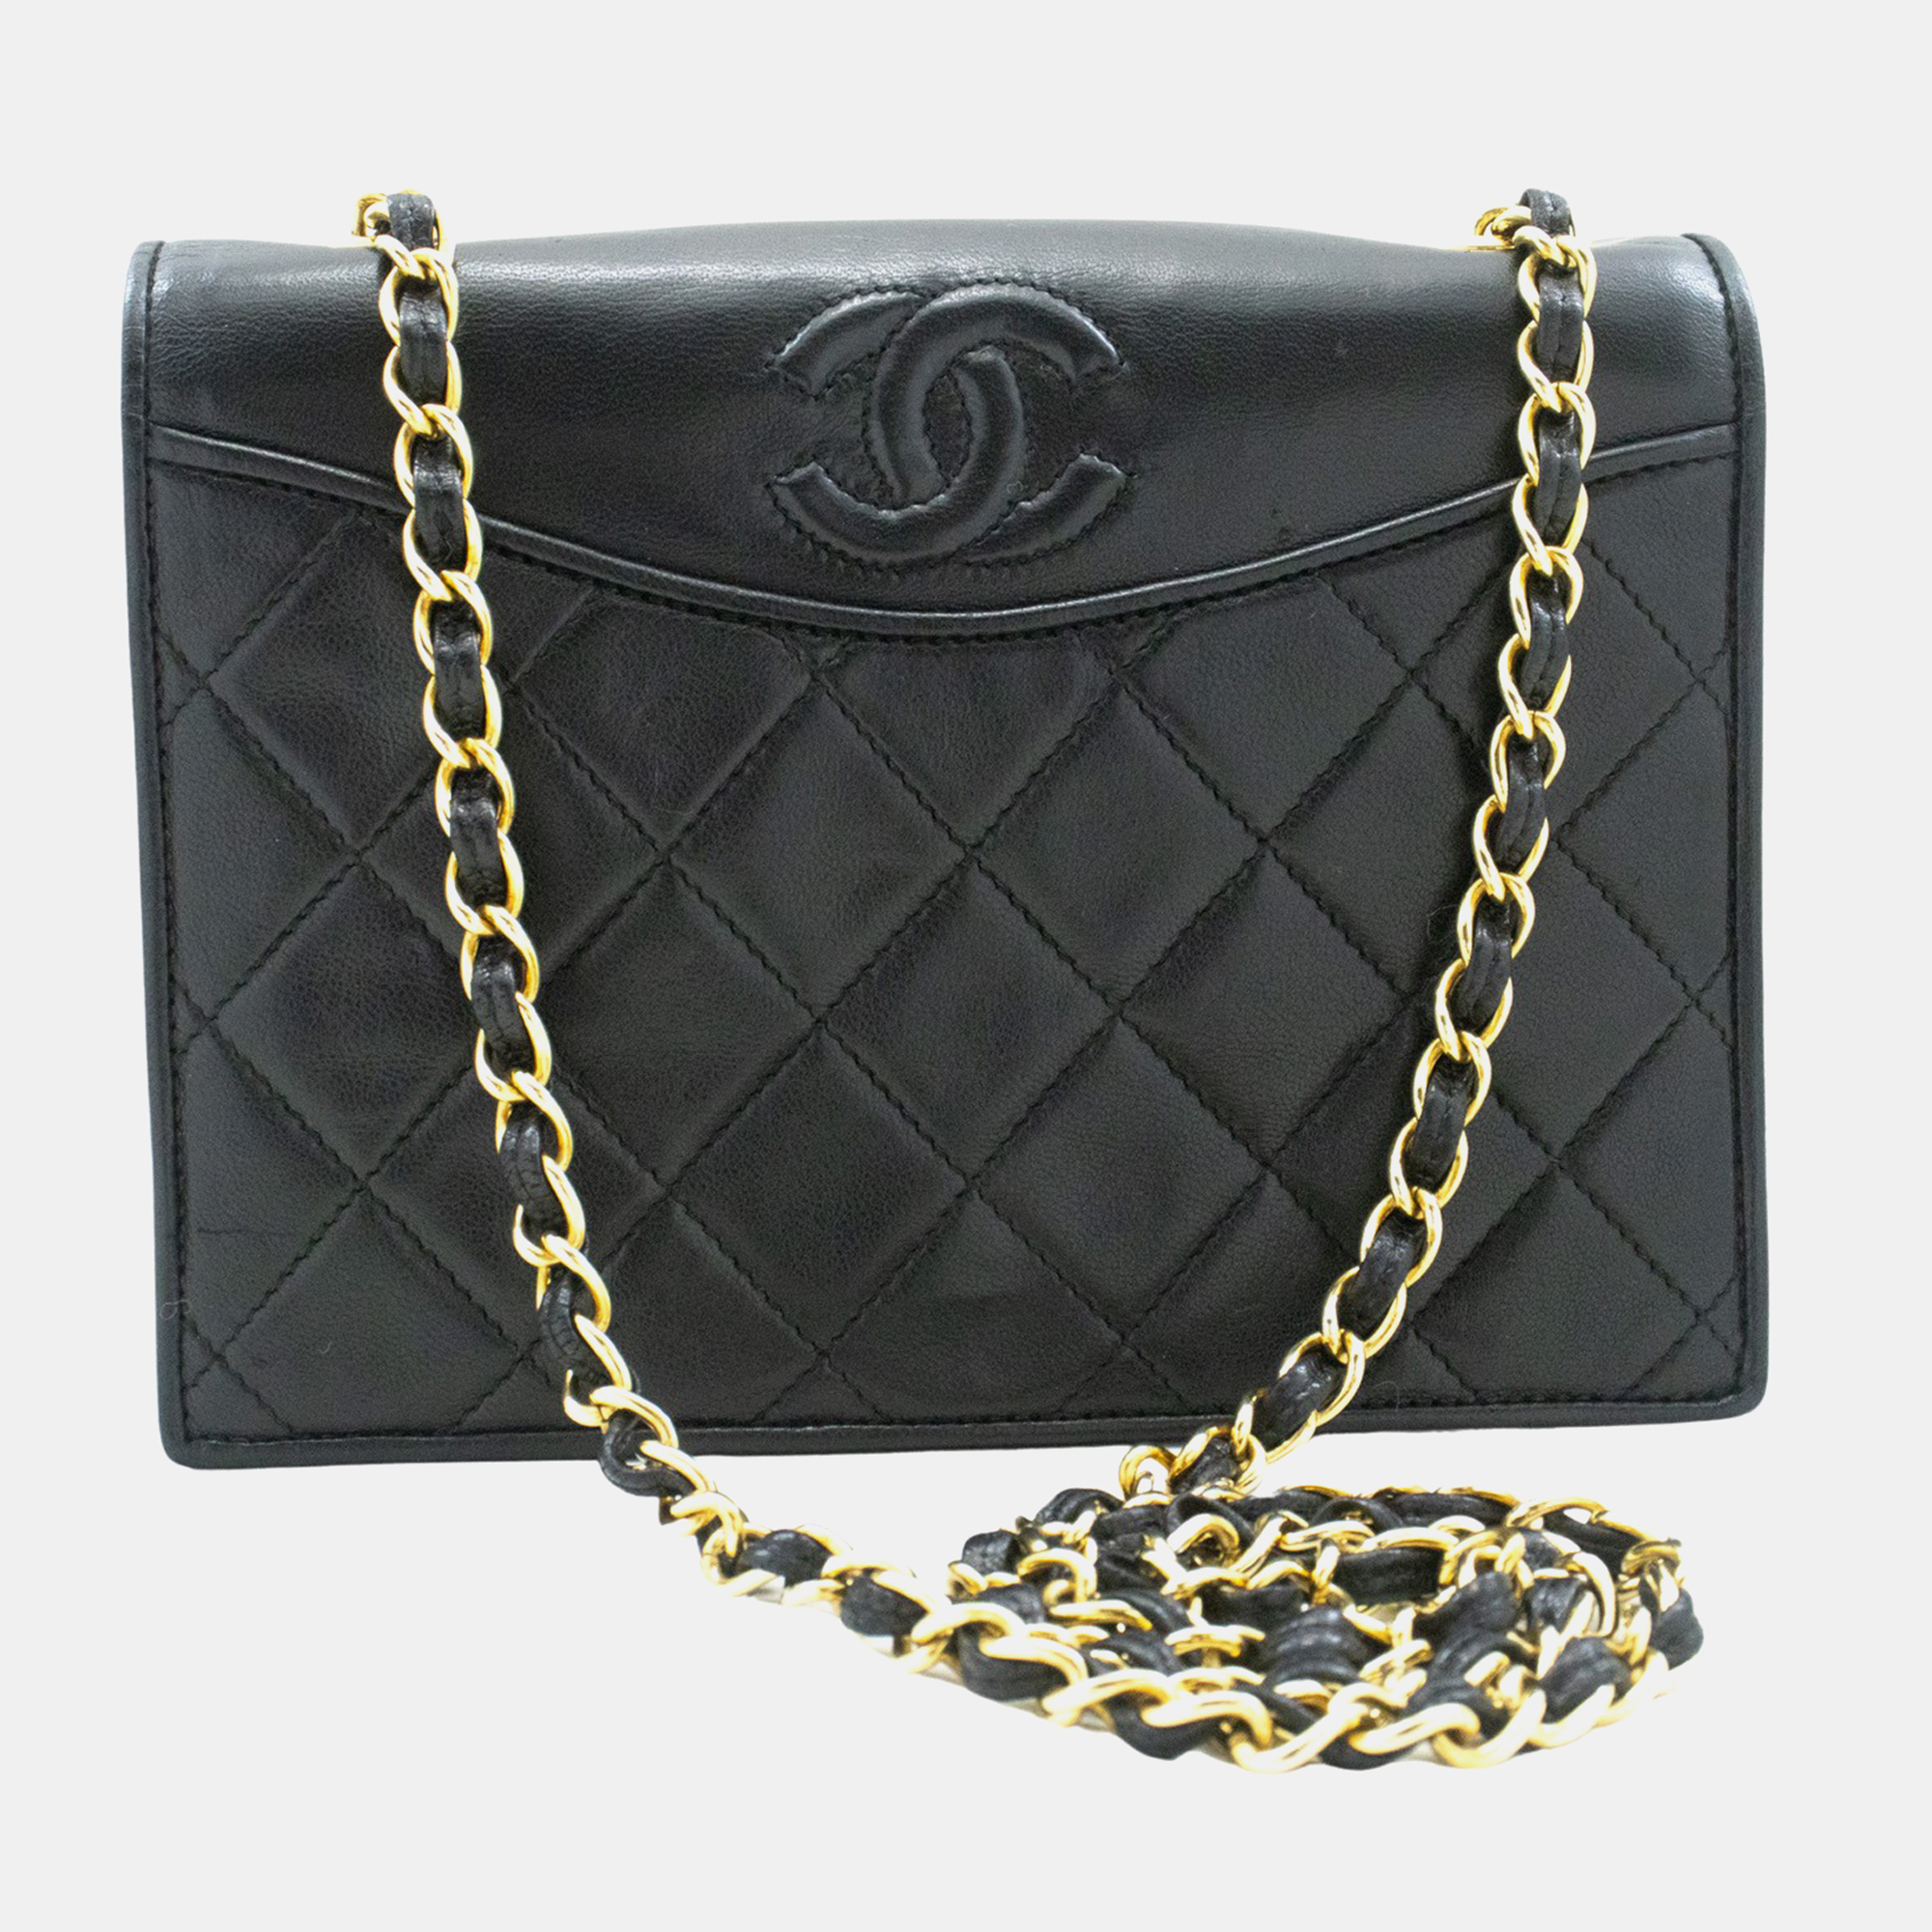 Chanel black leather full flap bag